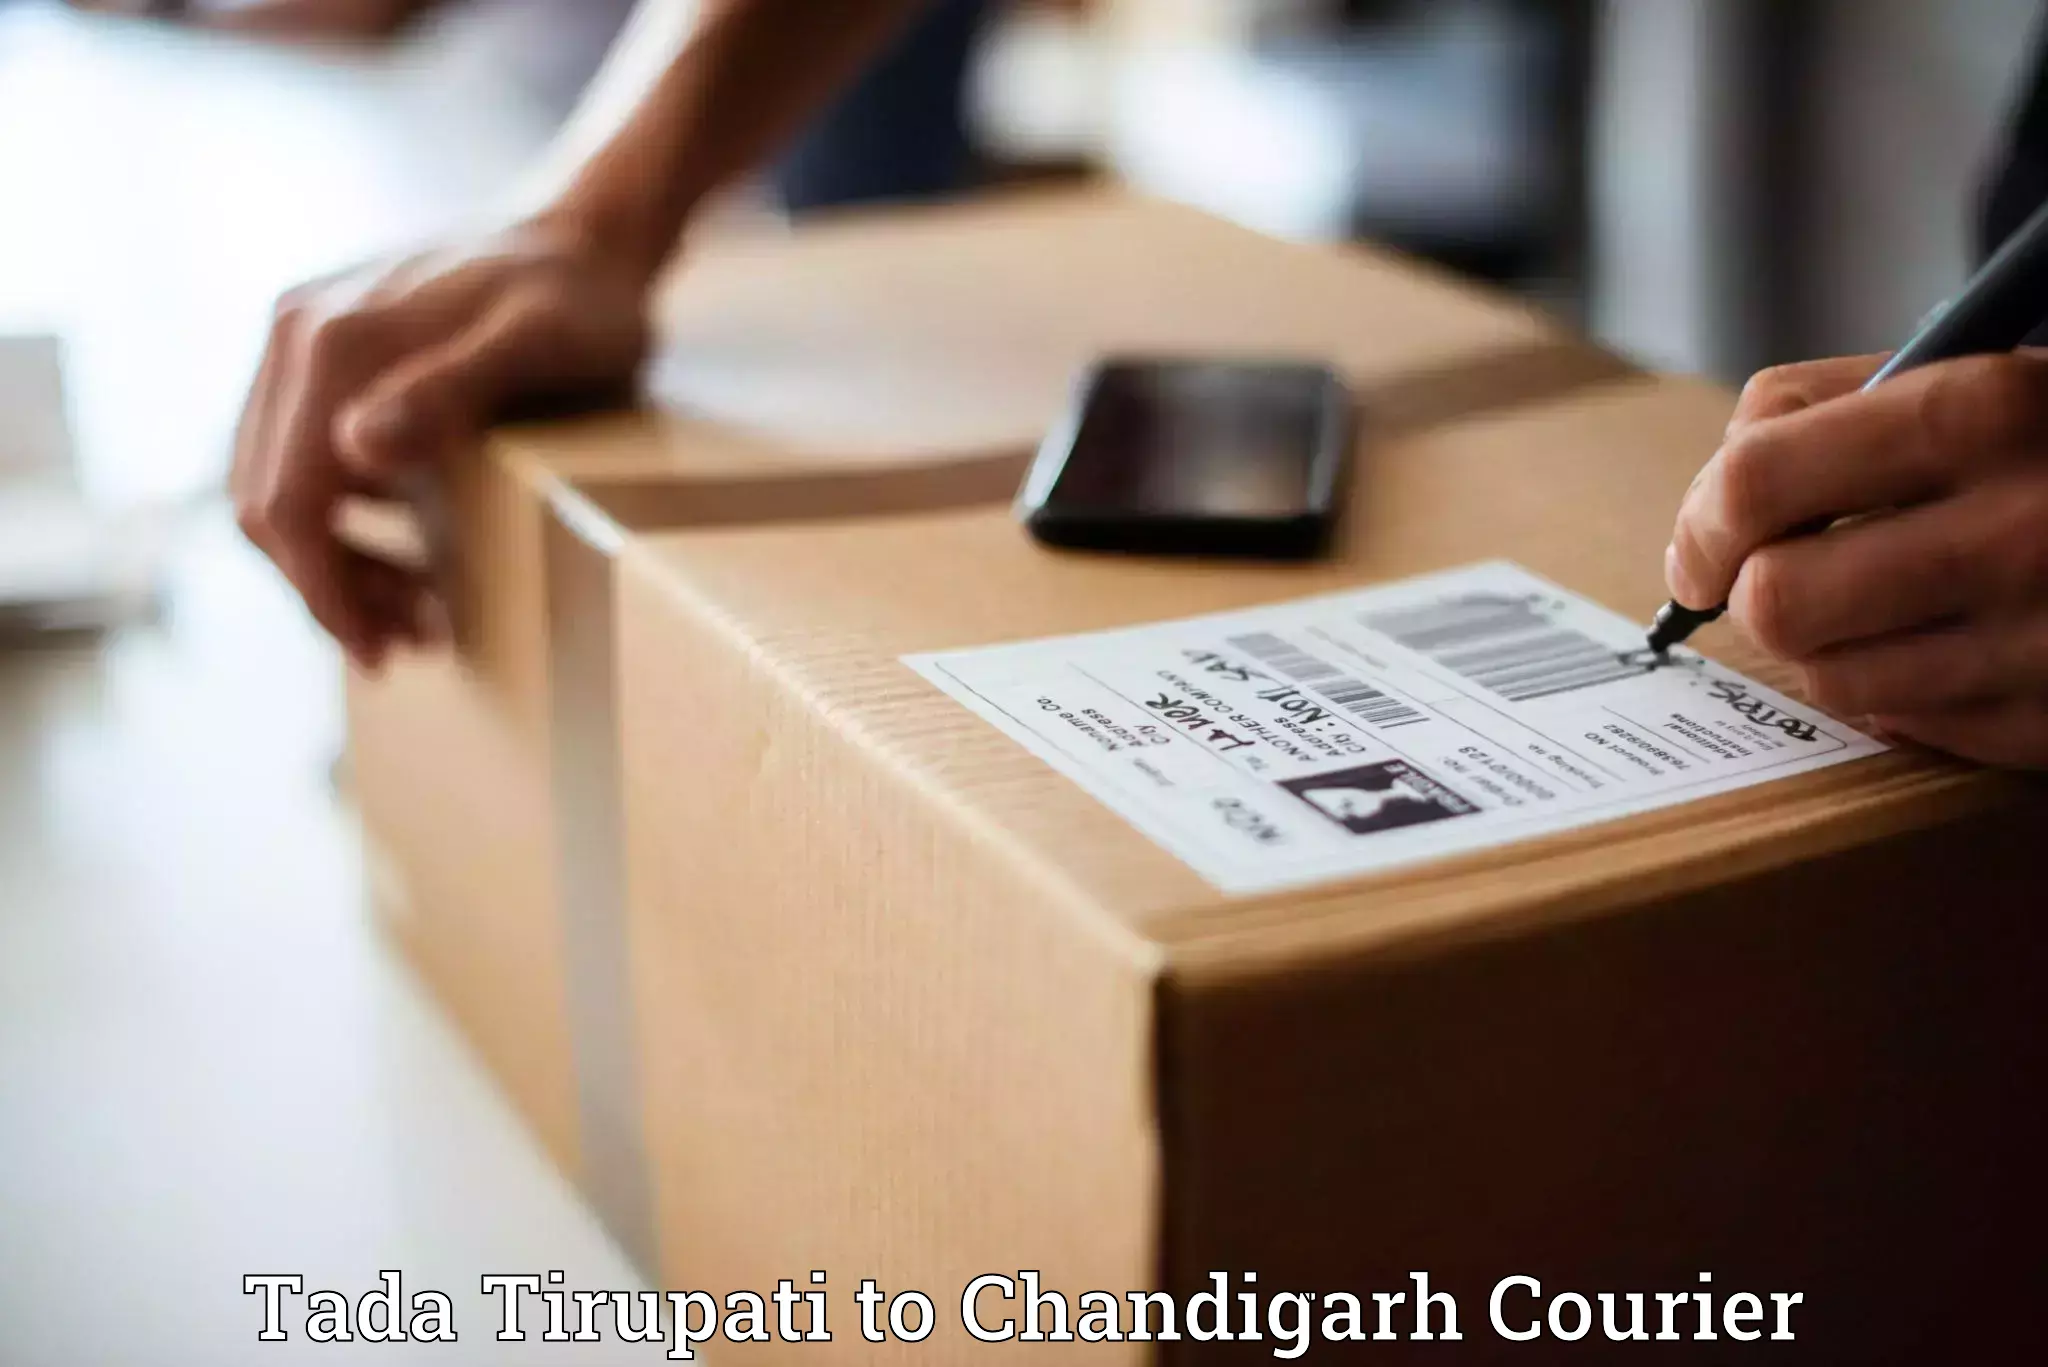 Courier app Tada Tirupati to Chandigarh